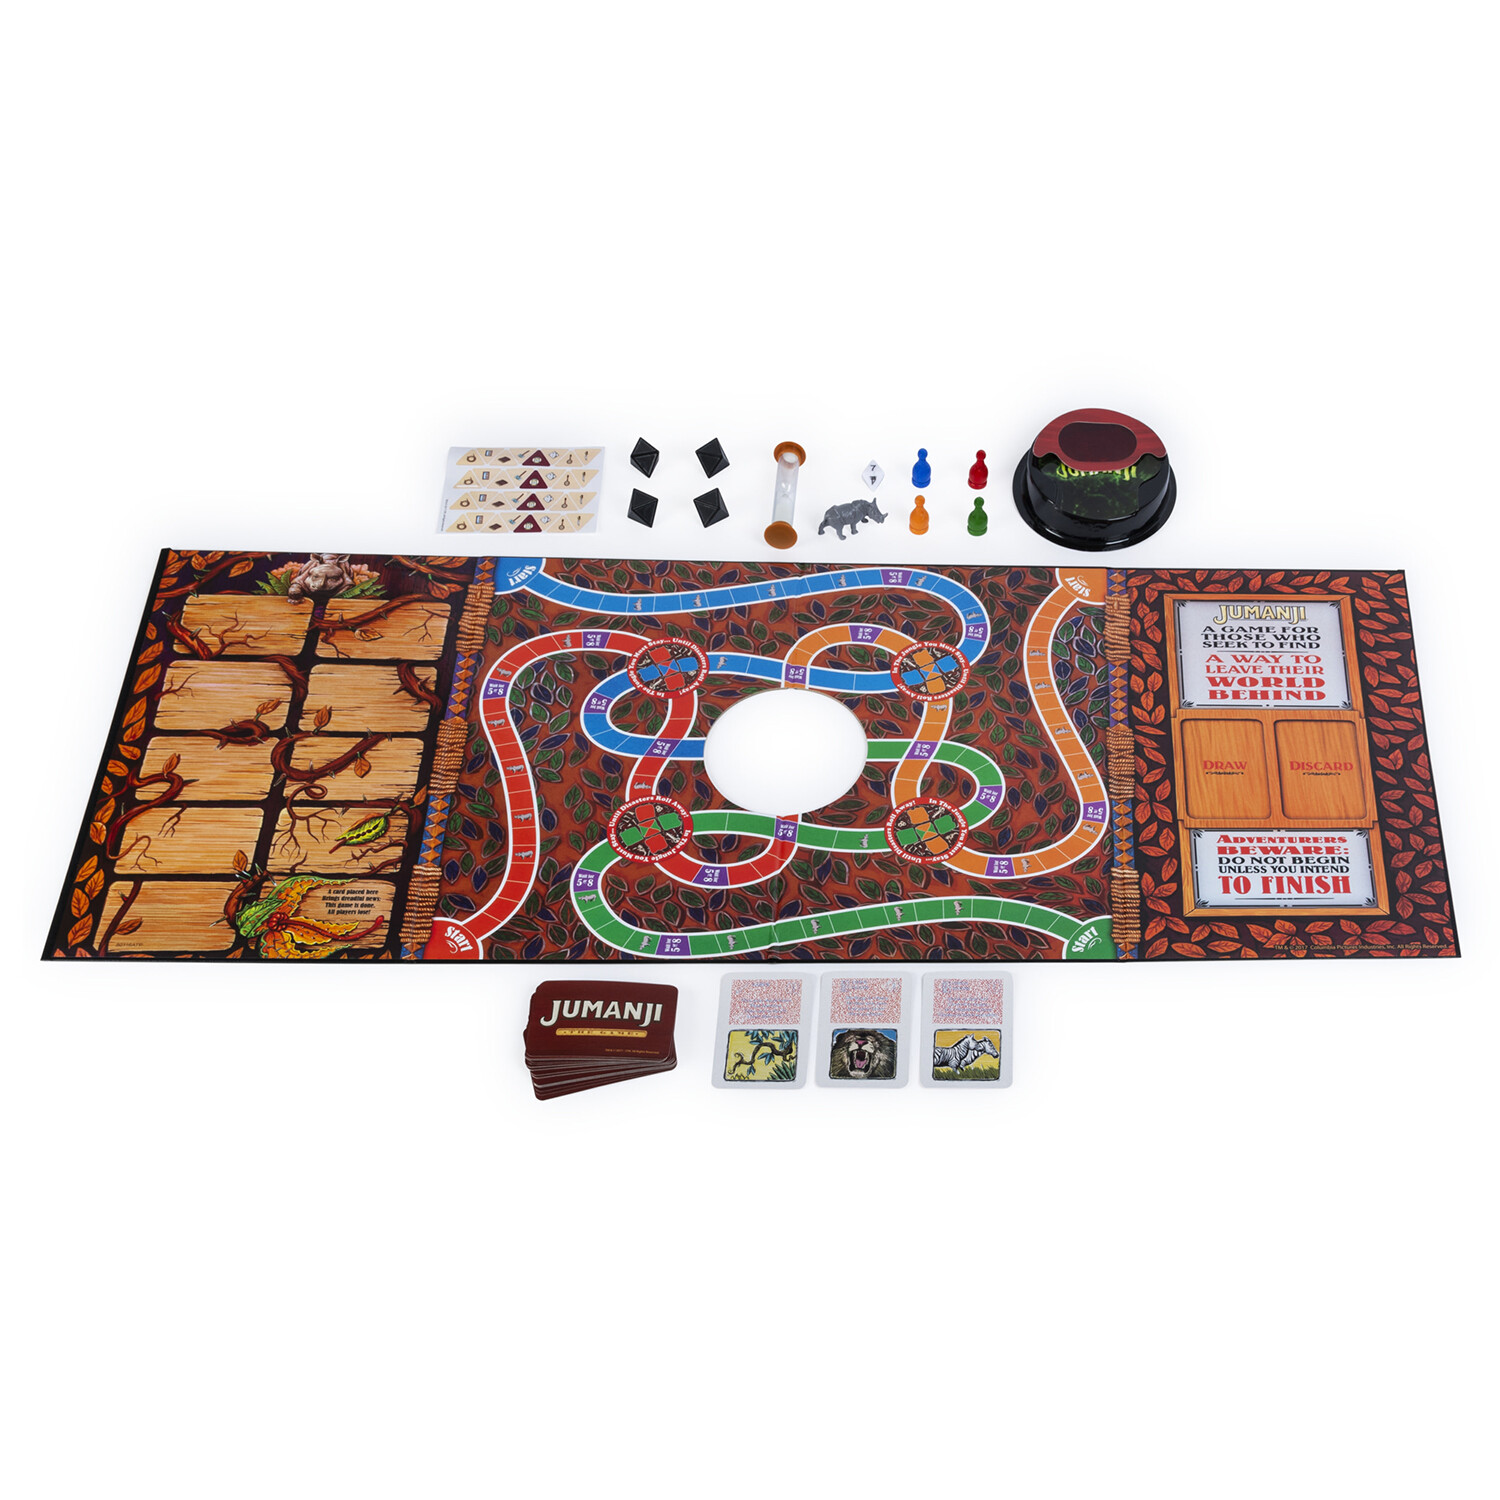 Jumanji the Board Game Image 2